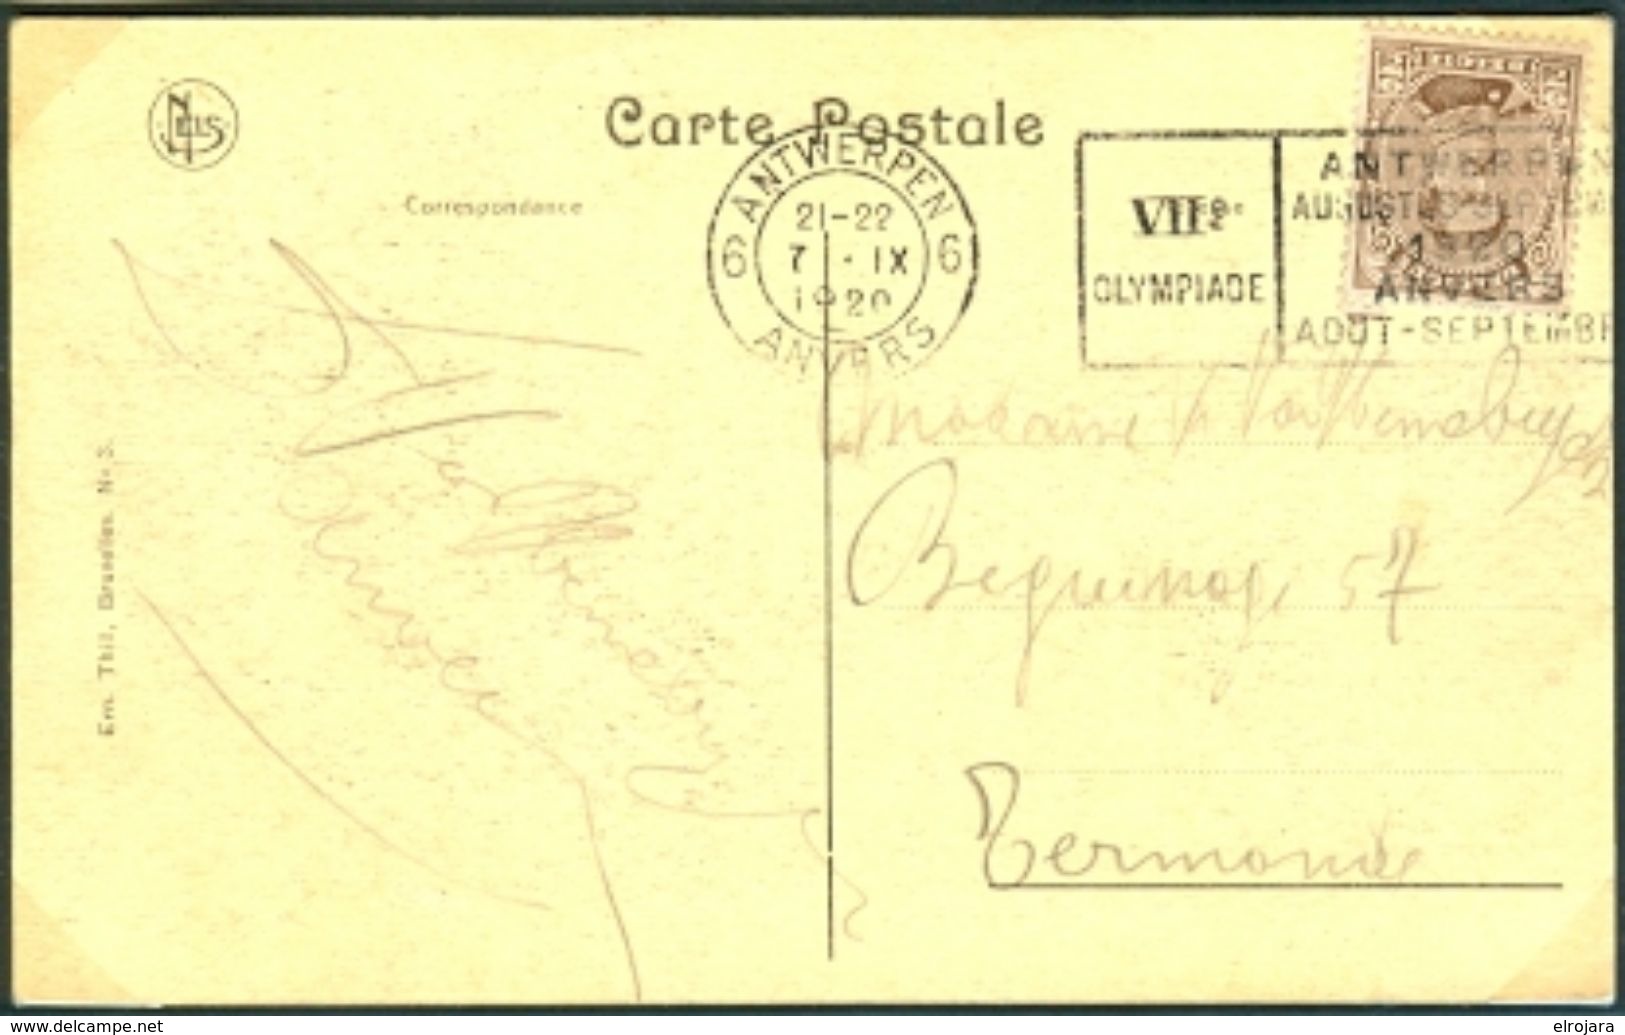 BELGIUM Postcard With Olympic Machine Cancel Antwerpen 6 Anvers Dated 7-IX-1920 Equestrian Day - Summer 1920: Antwerp